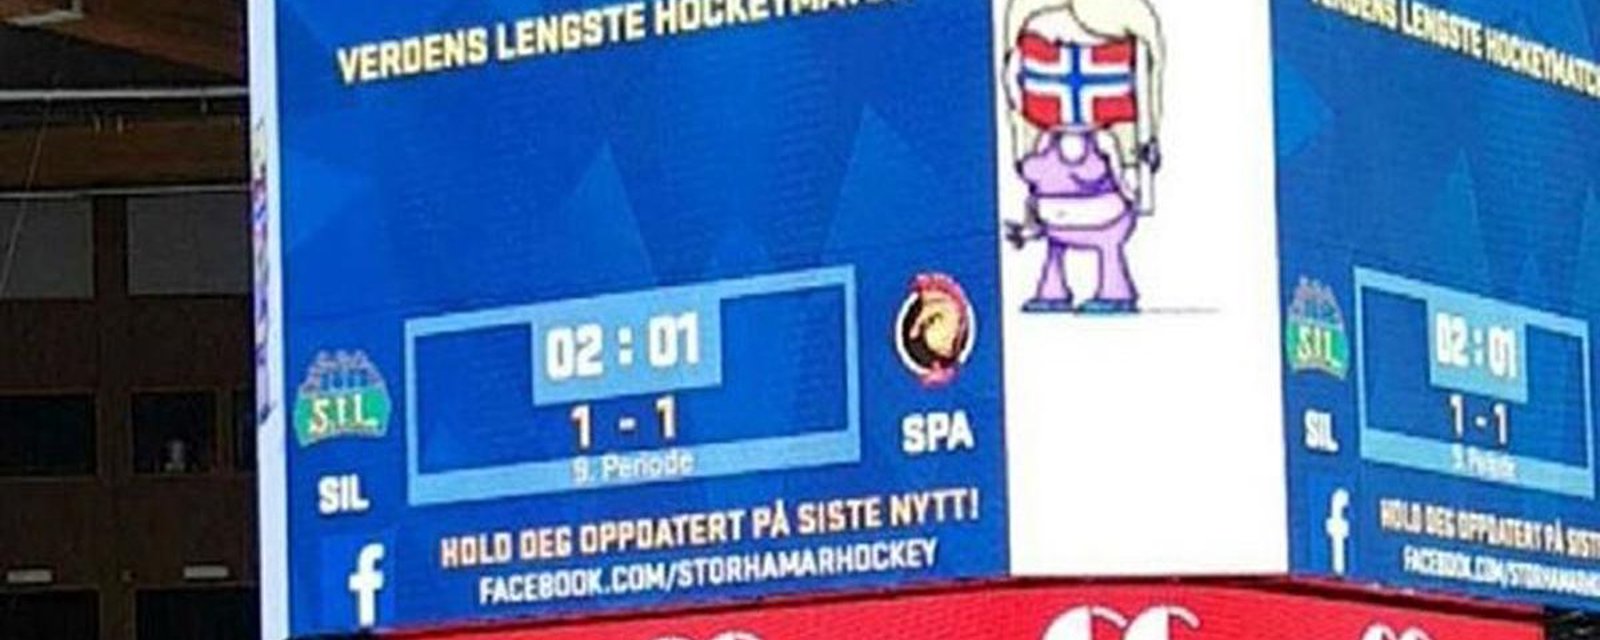 Record breaking hockey game happening live in Norway! 